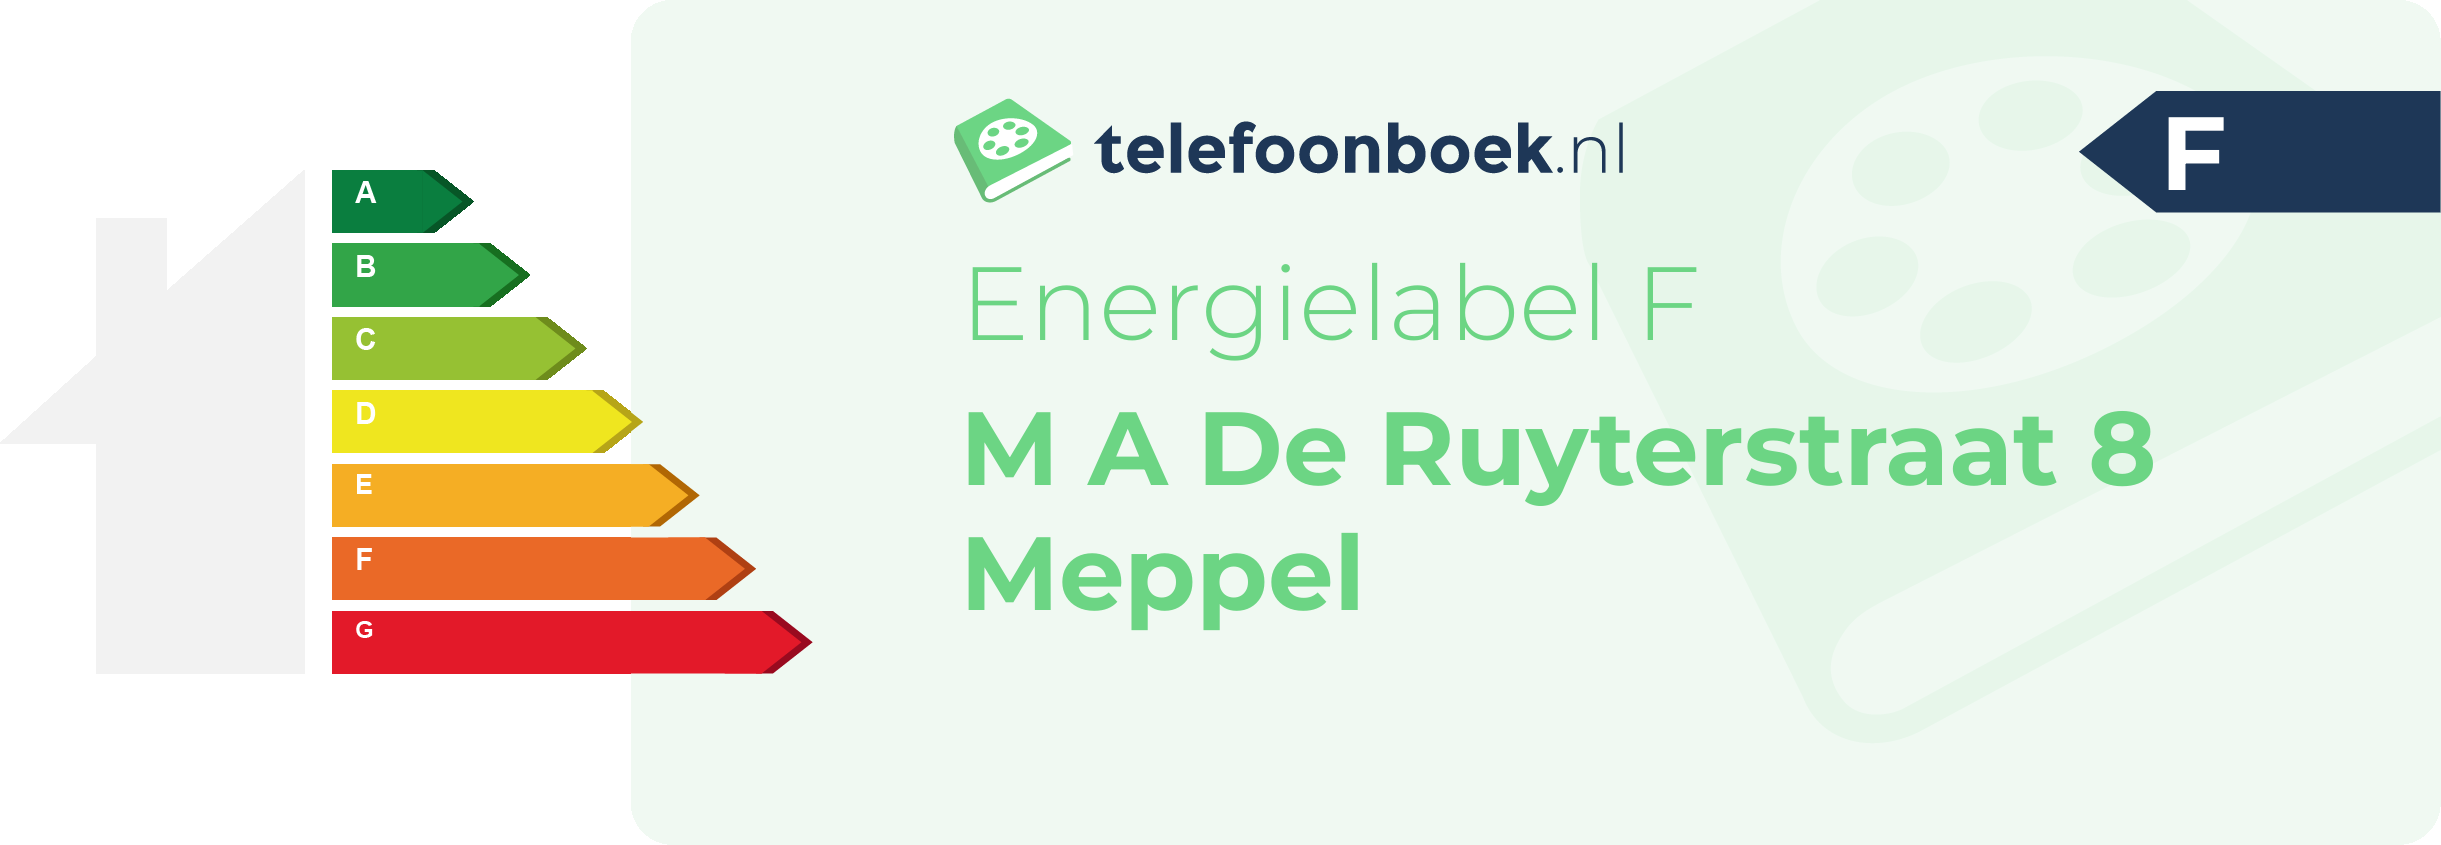 Energielabel M A De Ruyterstraat 8 Meppel